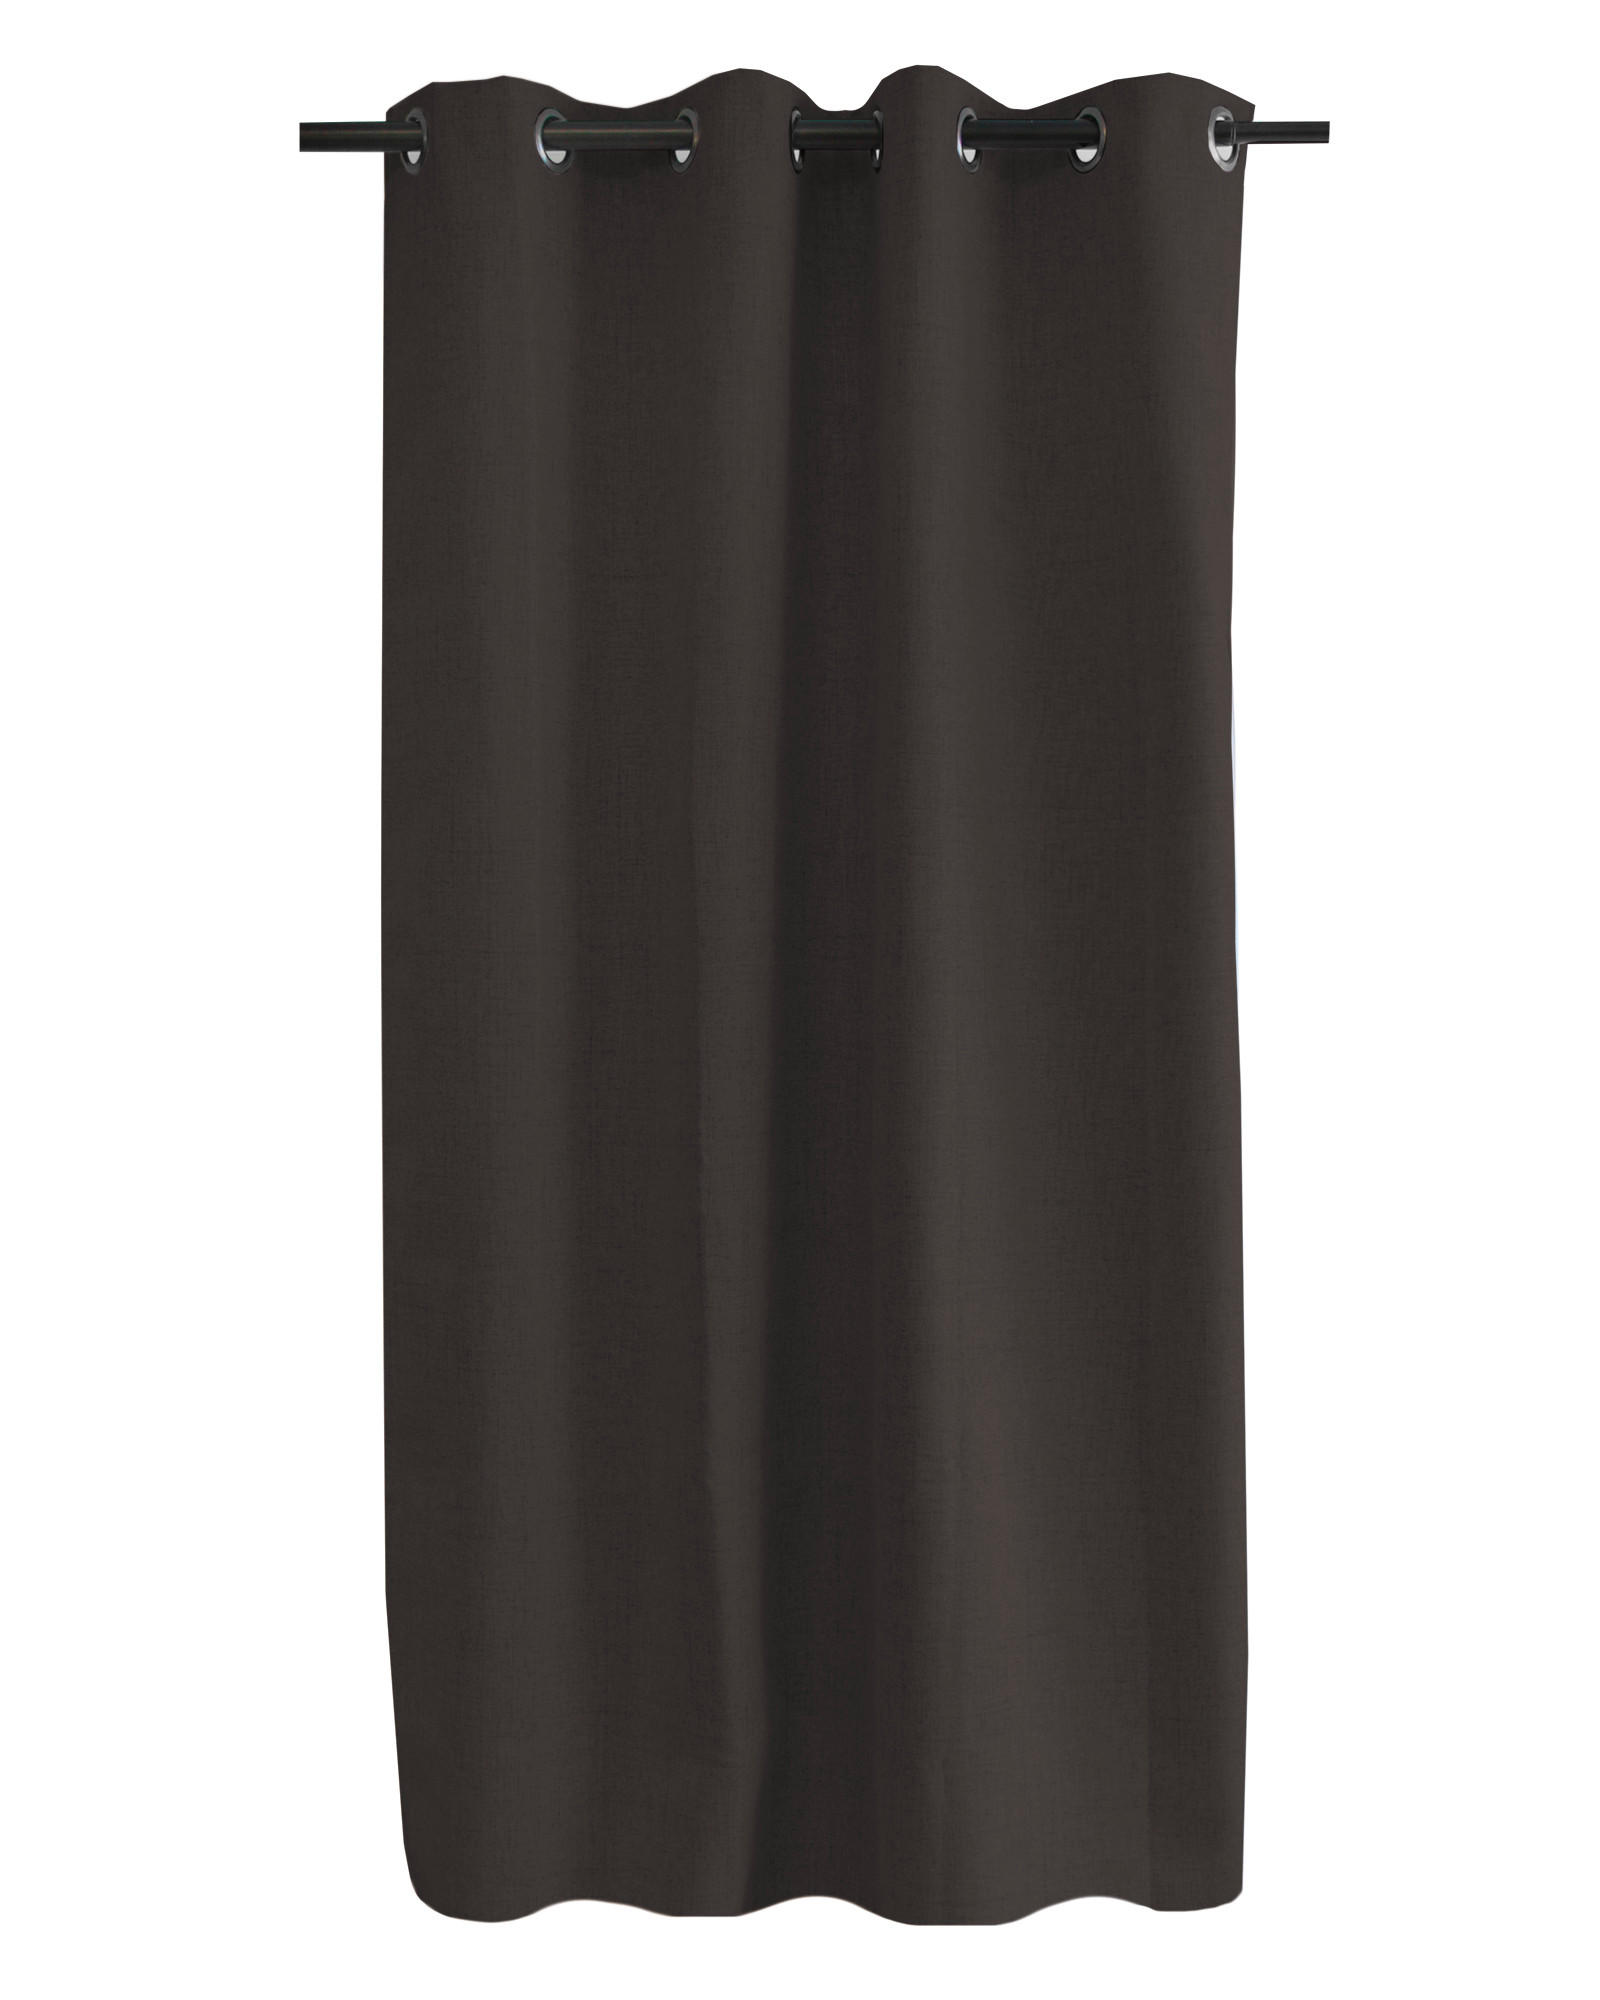 VERDUNKELUNGSVORHANG  black-out (lichtundurchlässig)  135/260 cm   - Dunkelgrau, Basics, Textil (135/260cm)